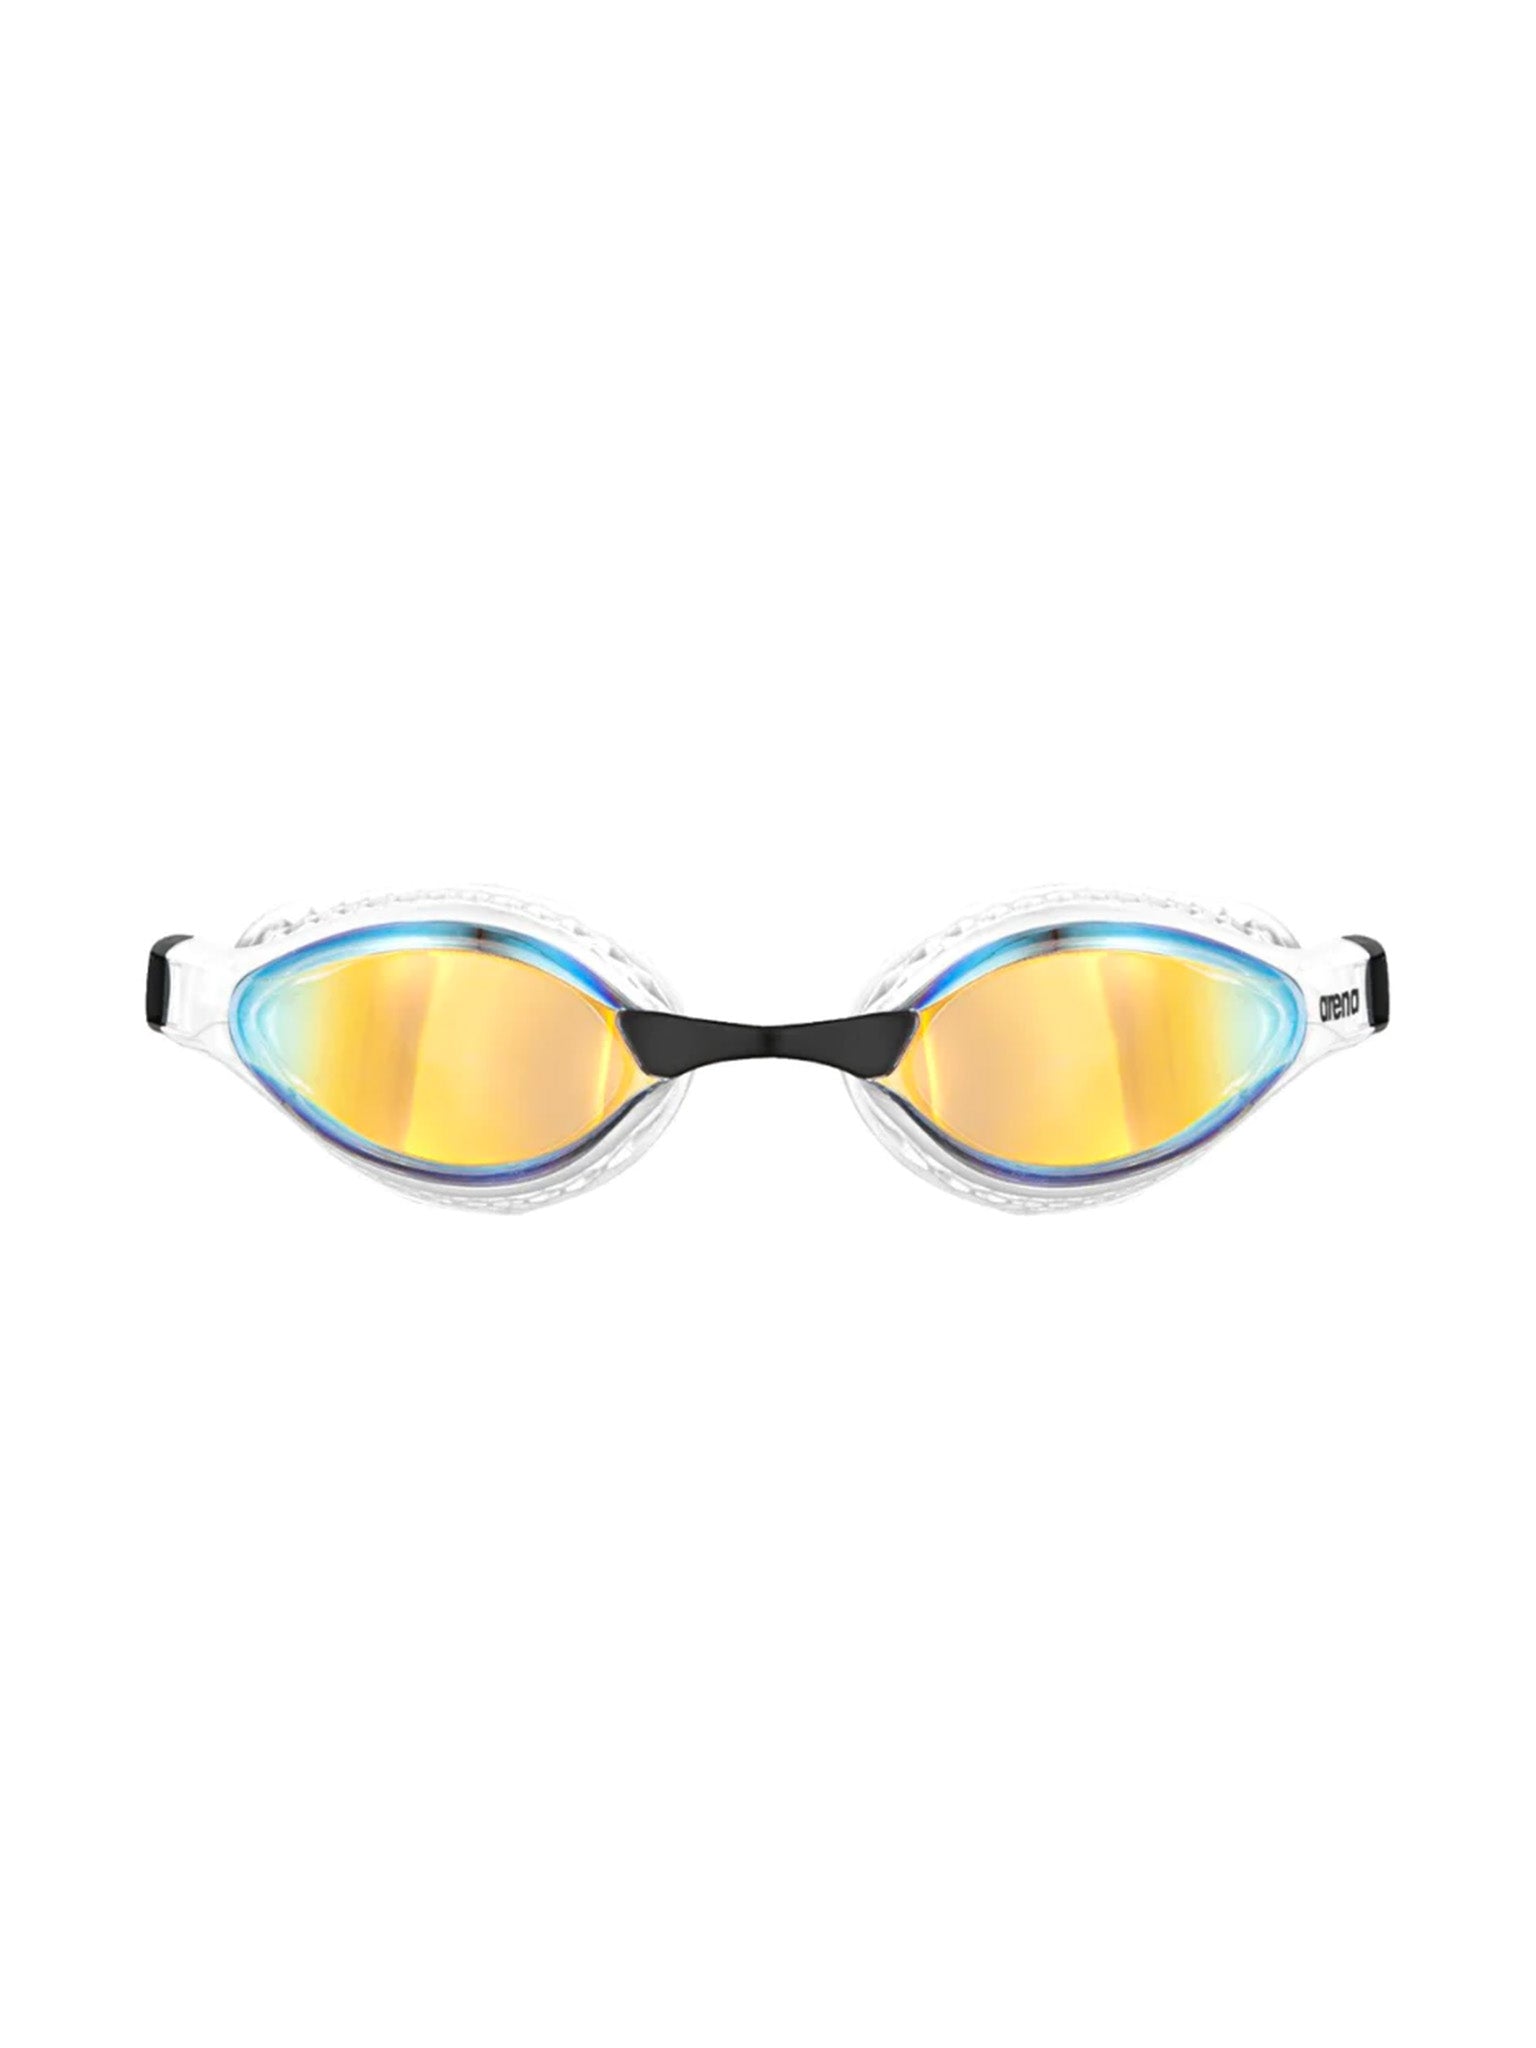 Swim Goggle - Airspeed Mirror